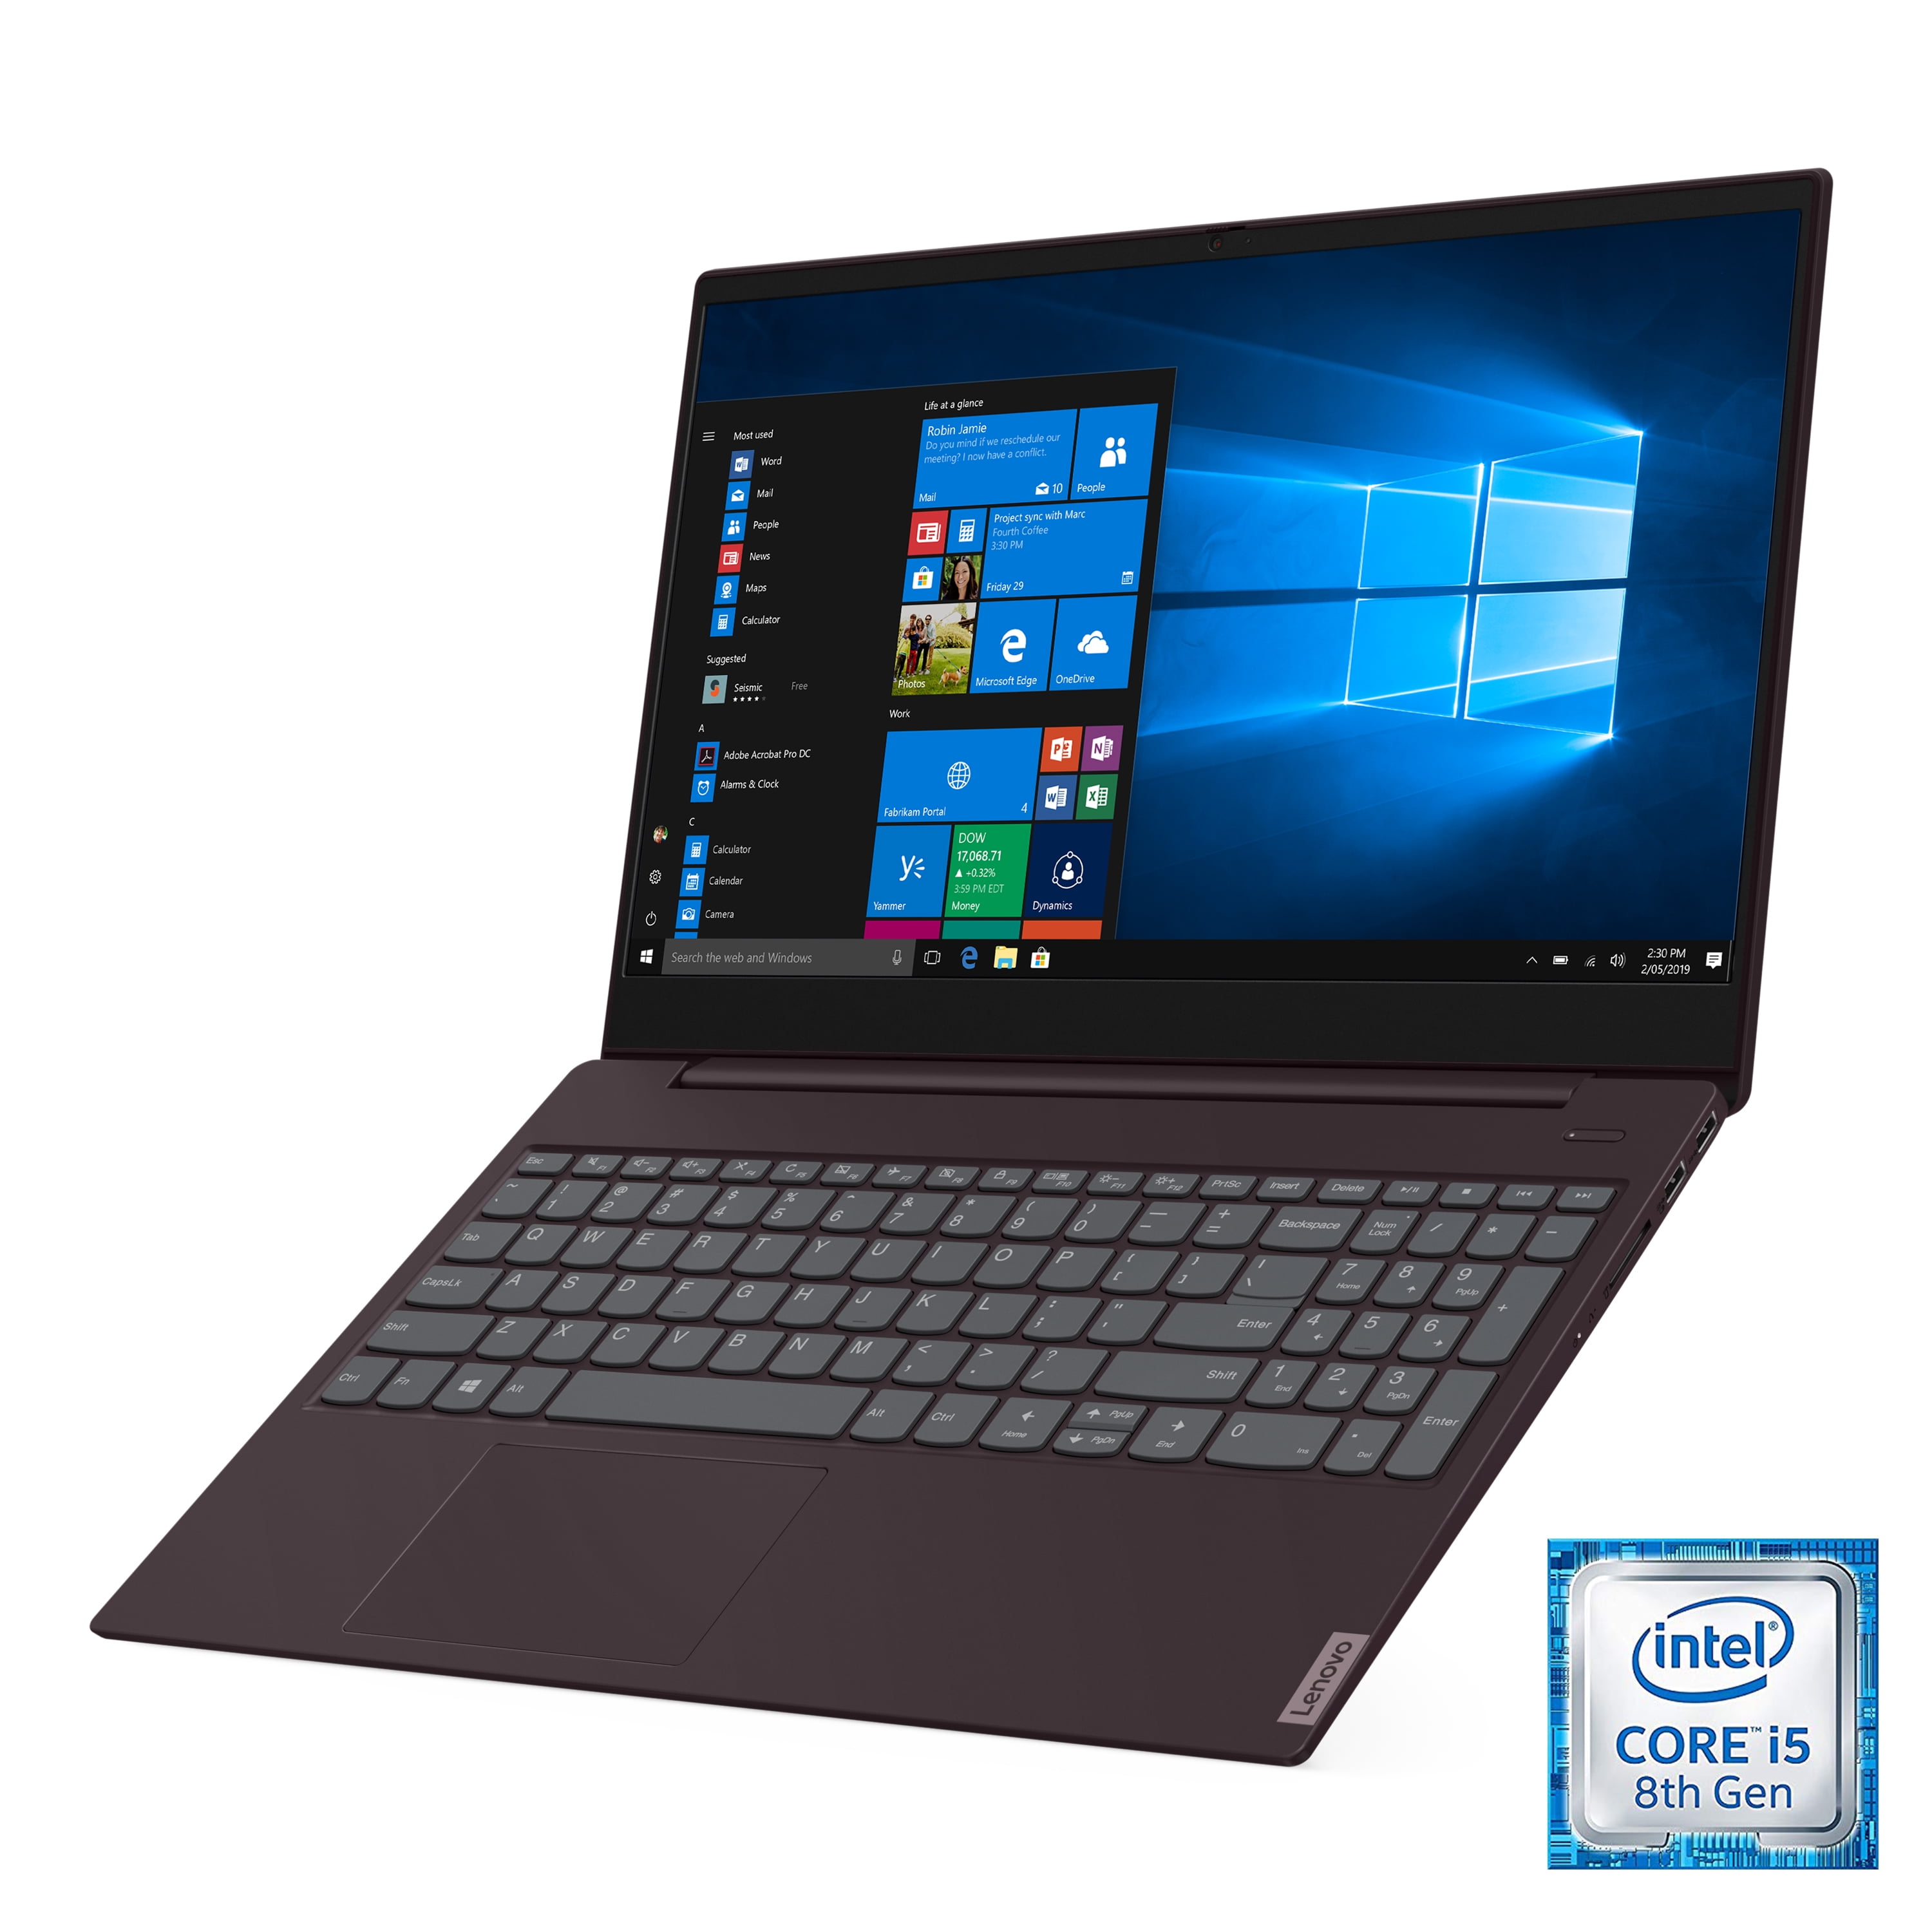 Lenovo ideapad S340 15.6" Laptop, Intel Core i5-8265U Quad-Core